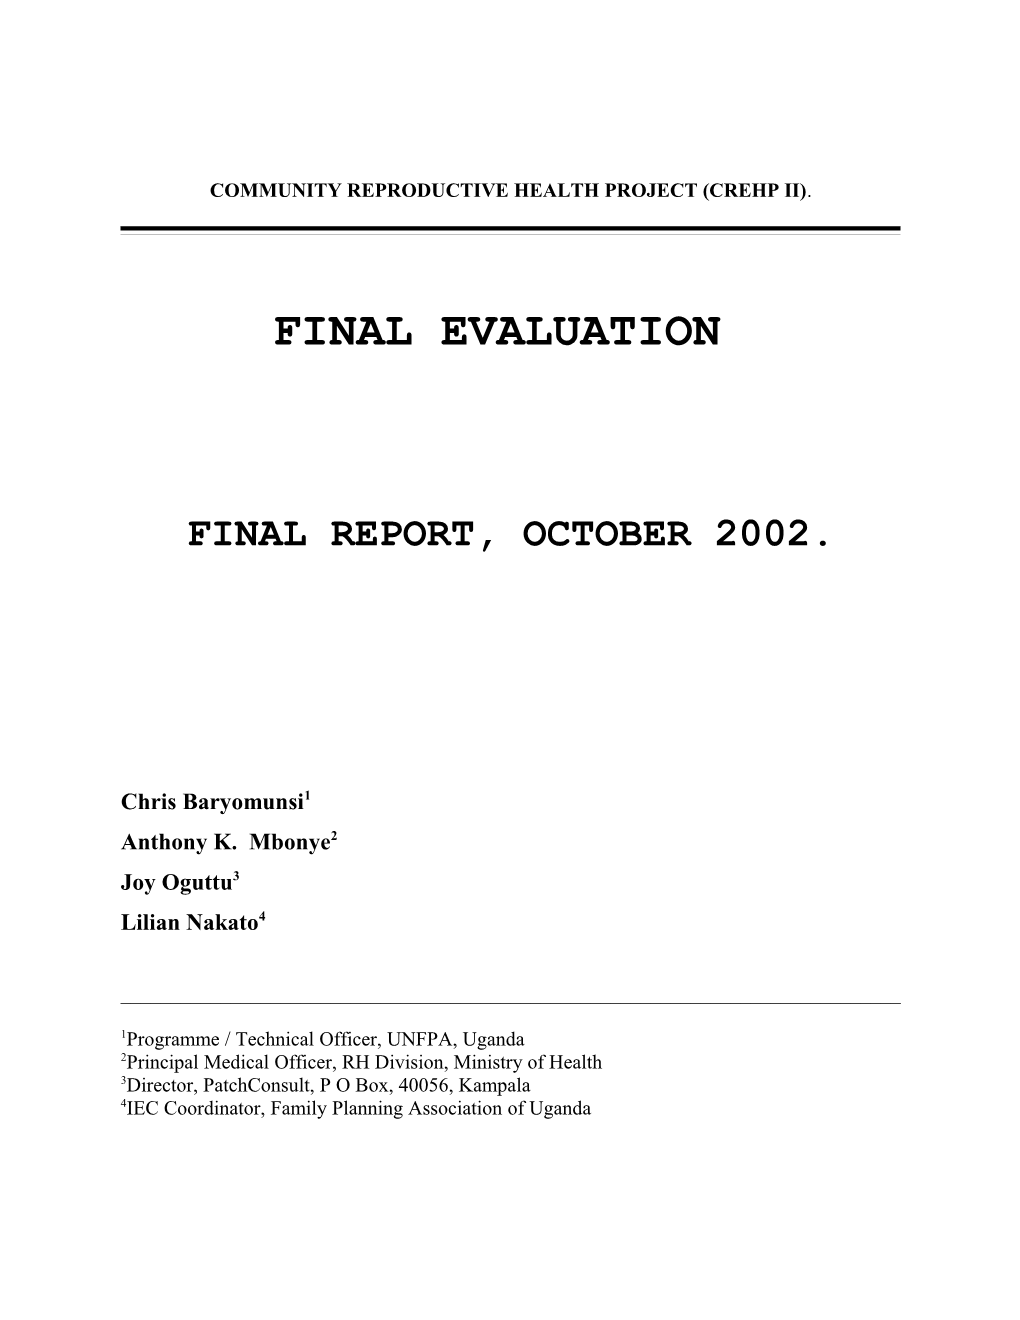 CREHP Final Evaluation Report